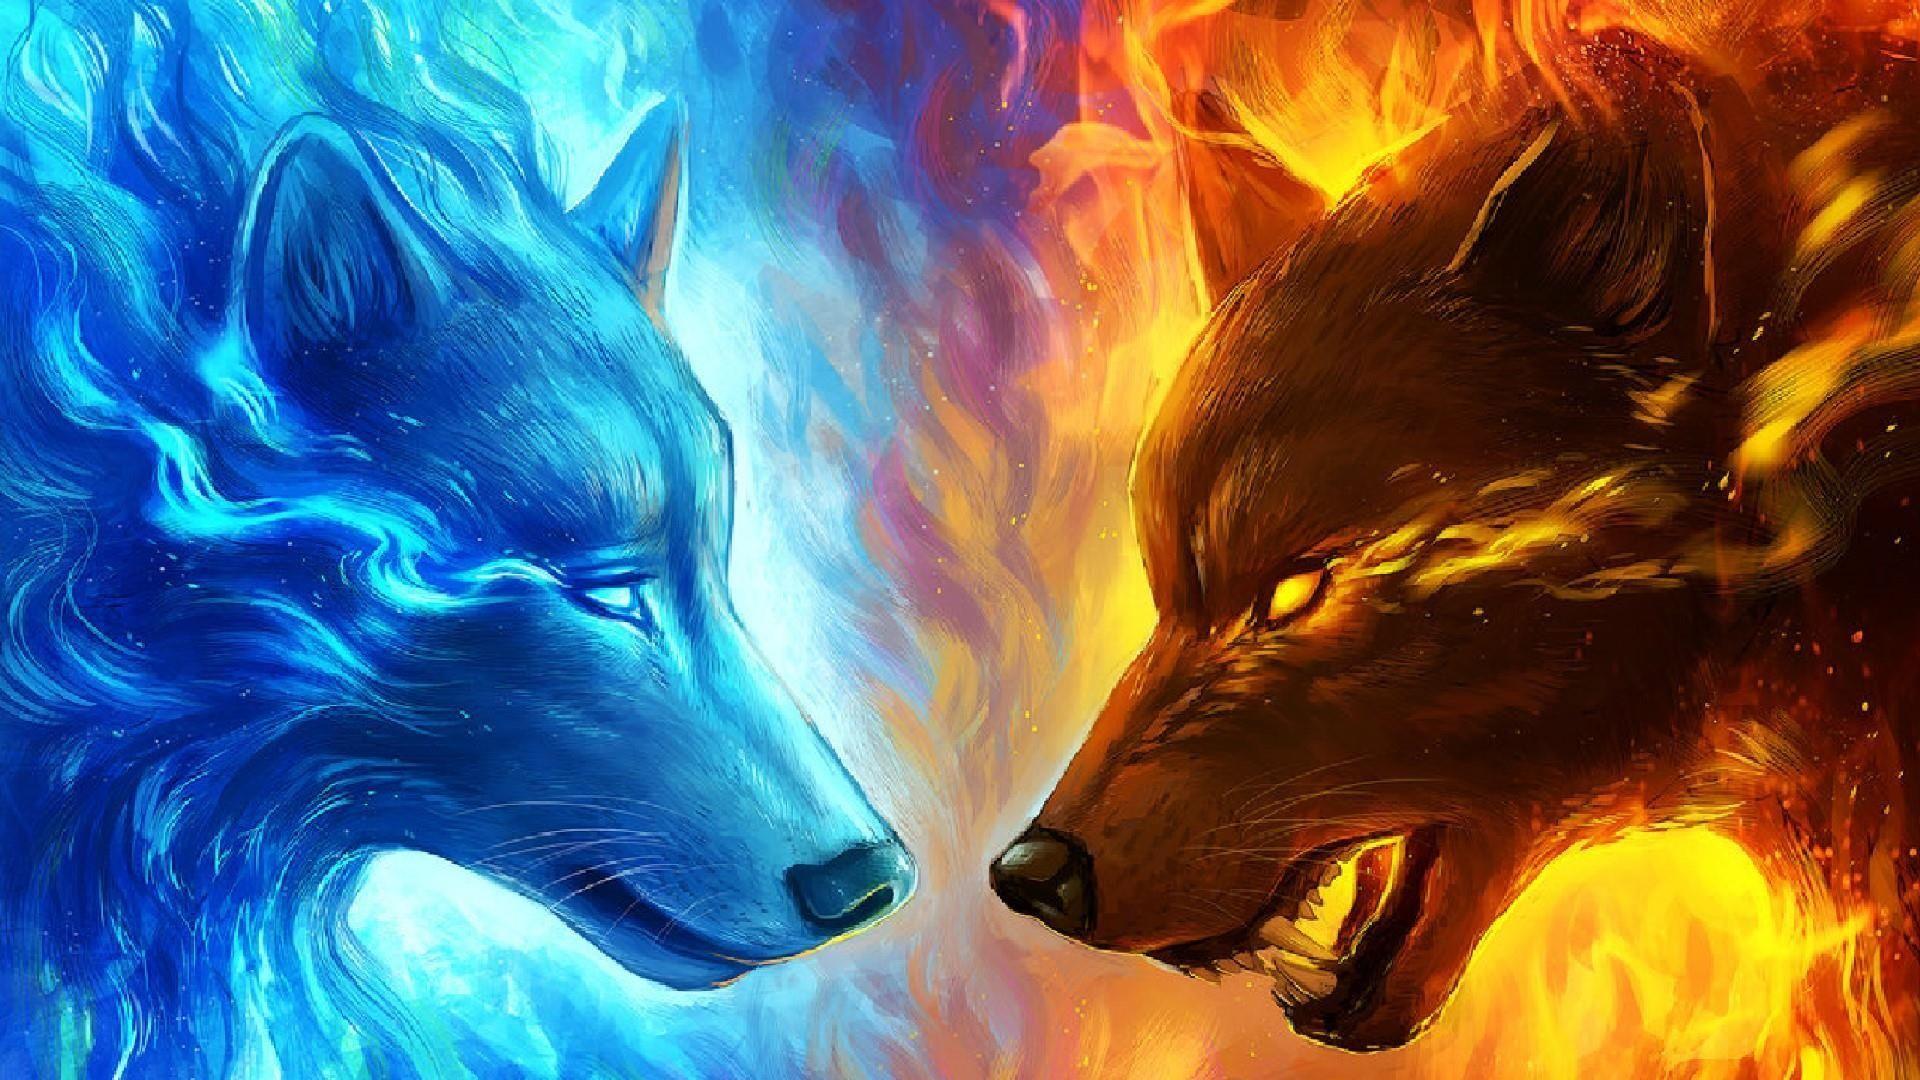 Fantasy Wolf Wallpaper. Wolf wallpaper, Fantasy wolf, Galaxy painting